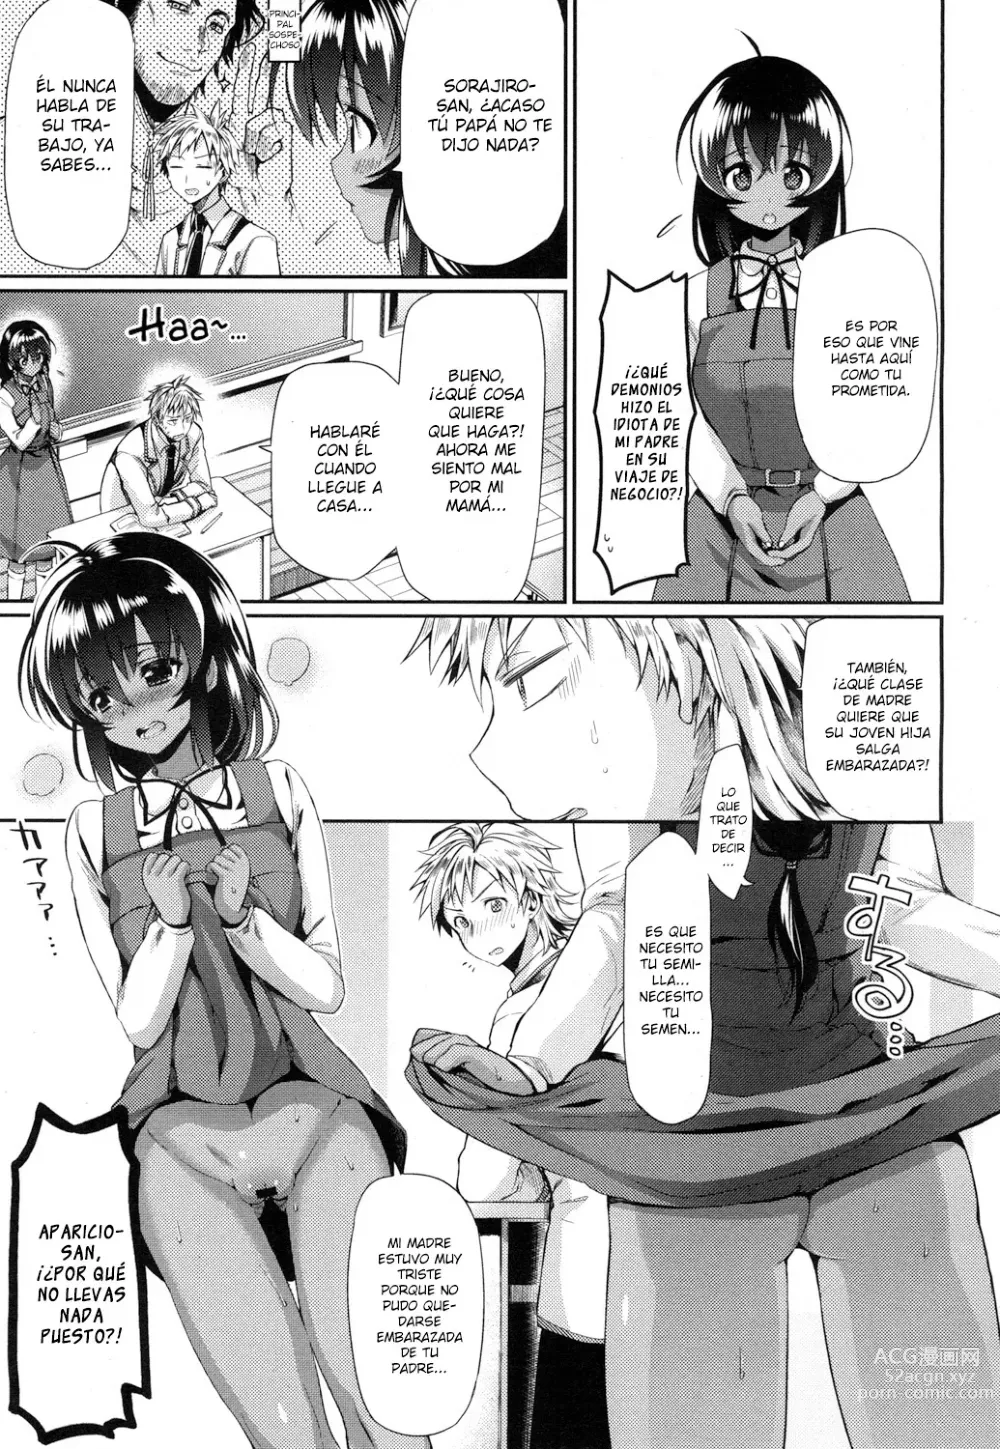 Page 5 of manga Te amo, mi amor.